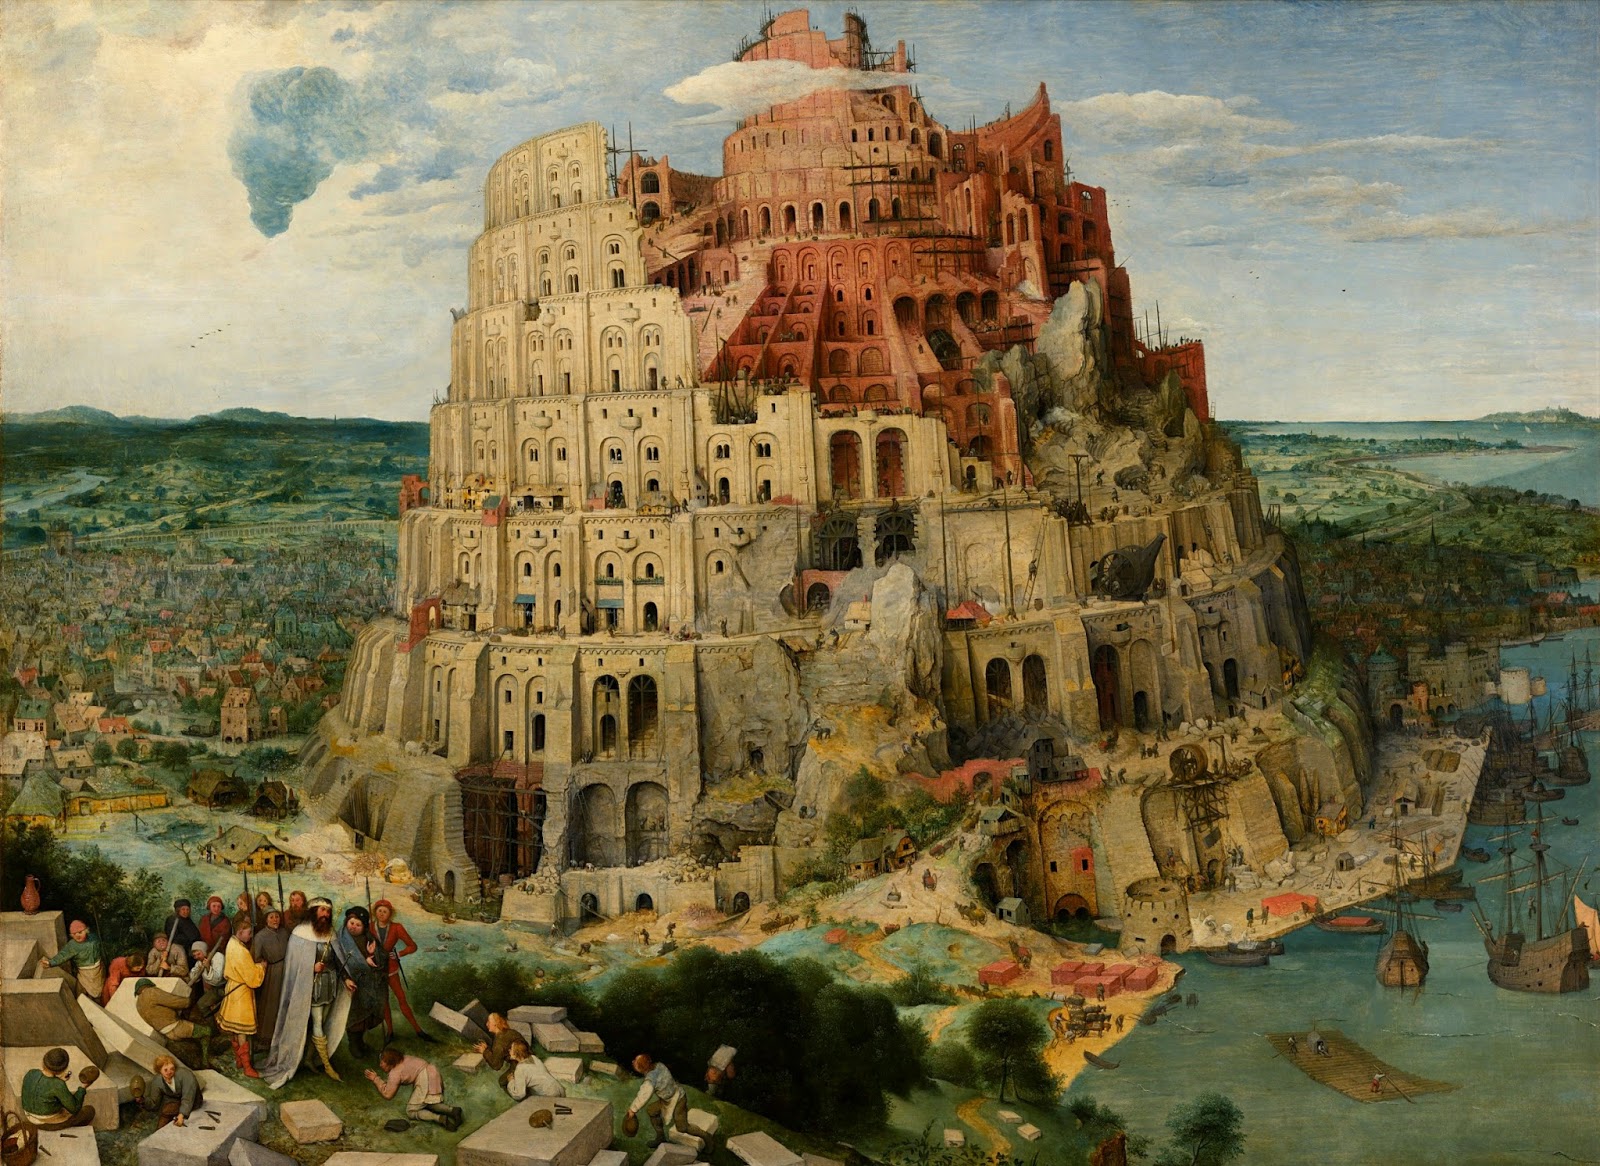 Pieter_Bruegel_the_Elder_-_The_Tower_of_Babel_(Vienna)_-_Google_Art_Project_2